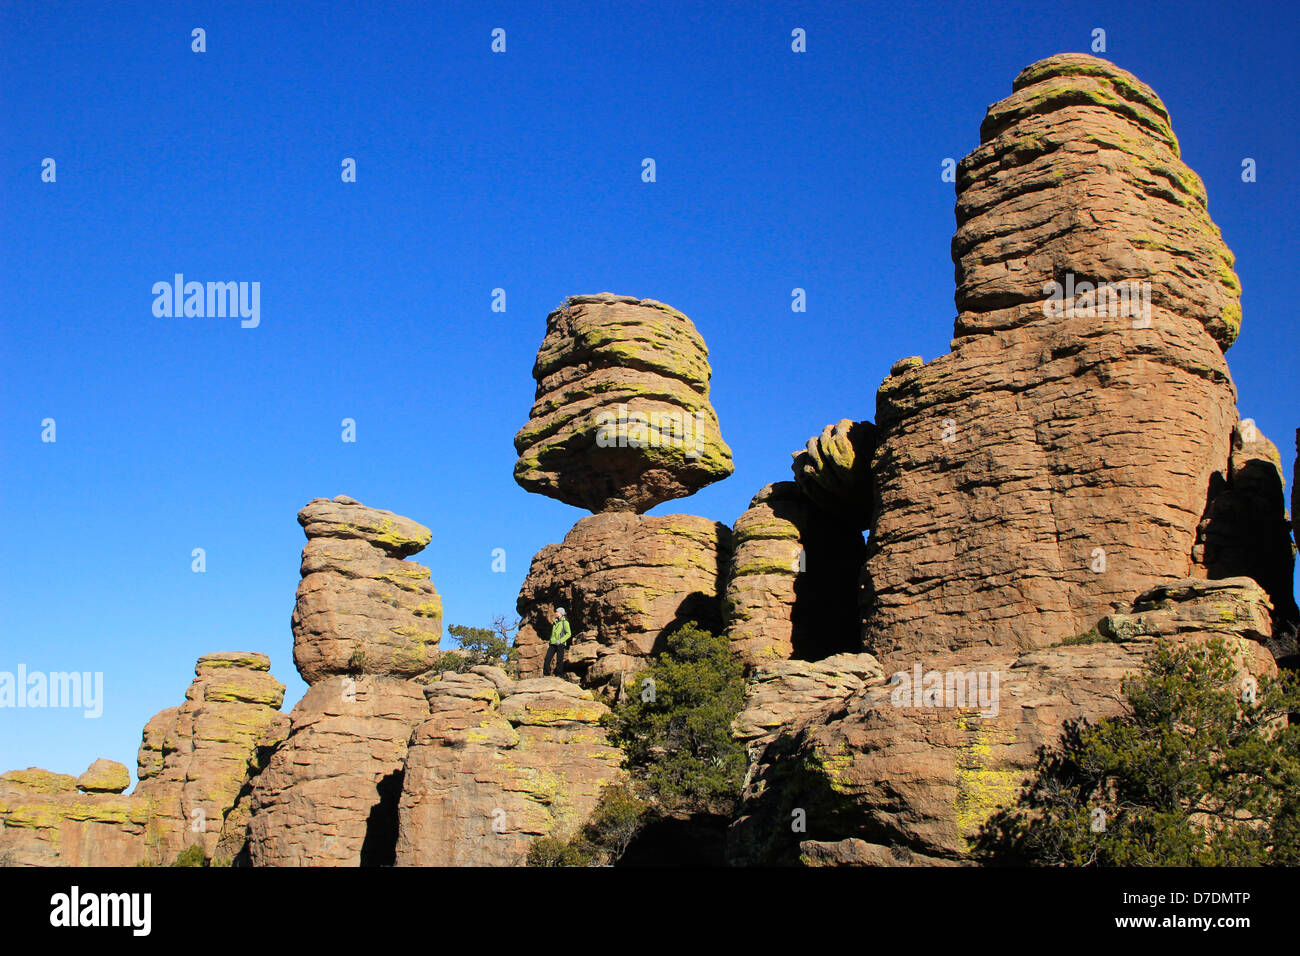 Balanced rock, Chiricahua National Monument, Arizona, USA Stock Photo